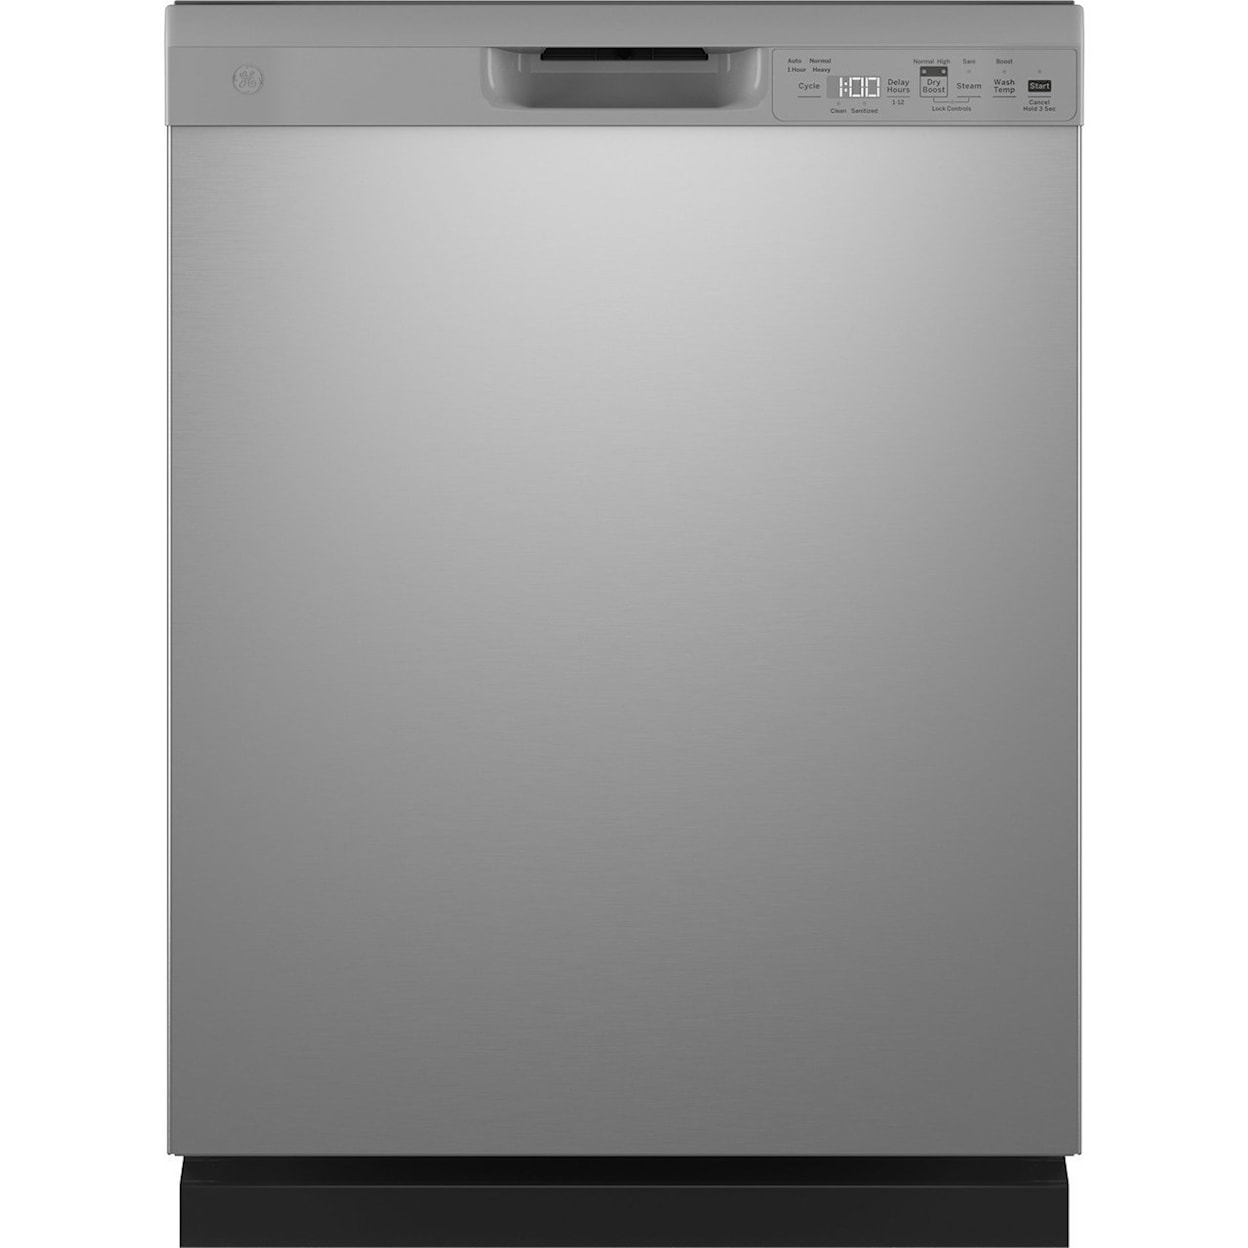 GE Appliances Dishwashers  GE® Front Control Dishwasher